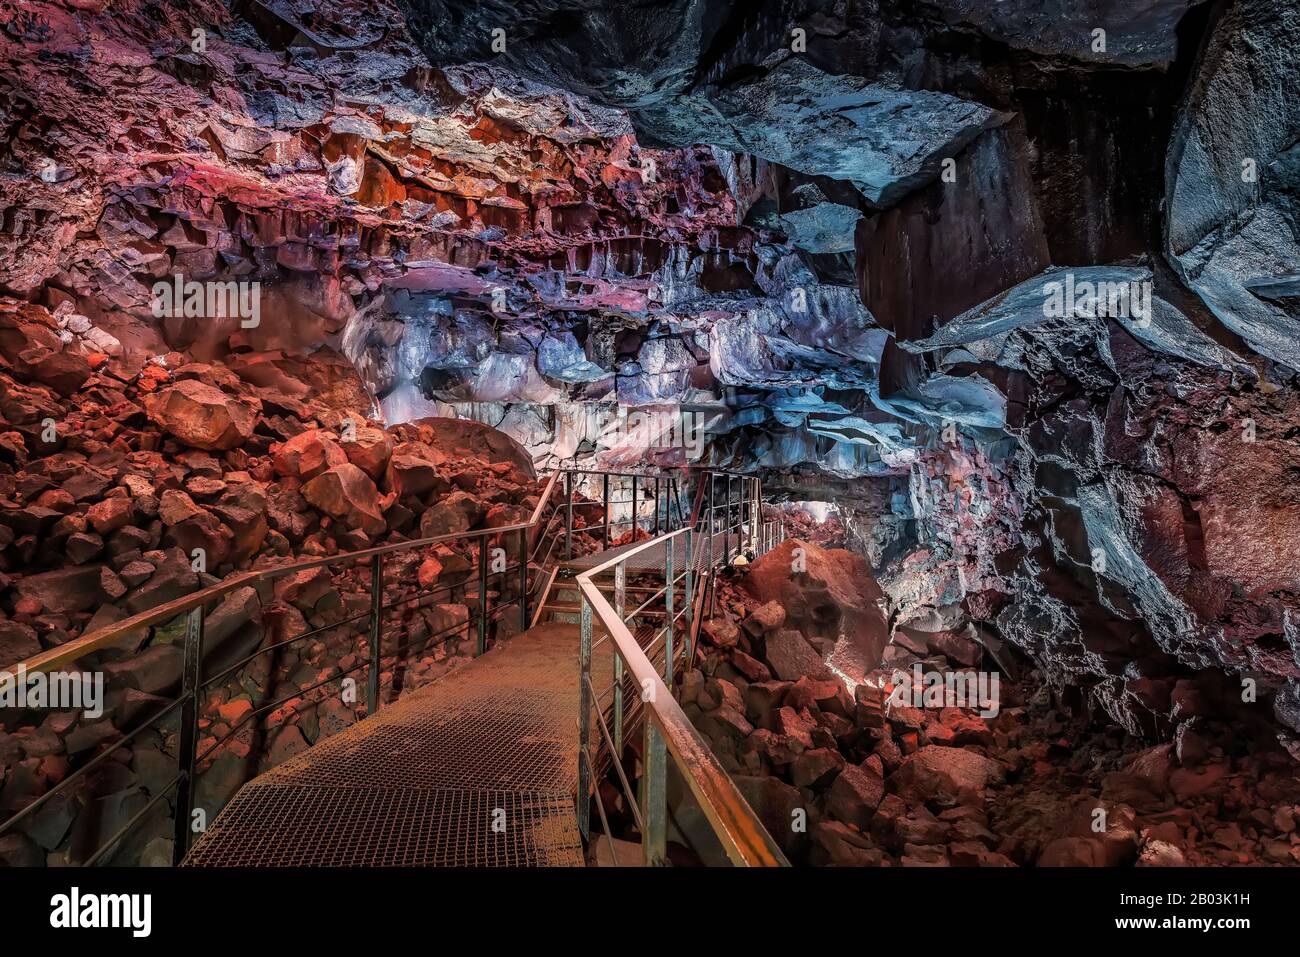 Raufarholshellir Lava Tunnel, Iceland. One of the longest lava tubes short distance from Reykjavik, Iceland Stock Photo